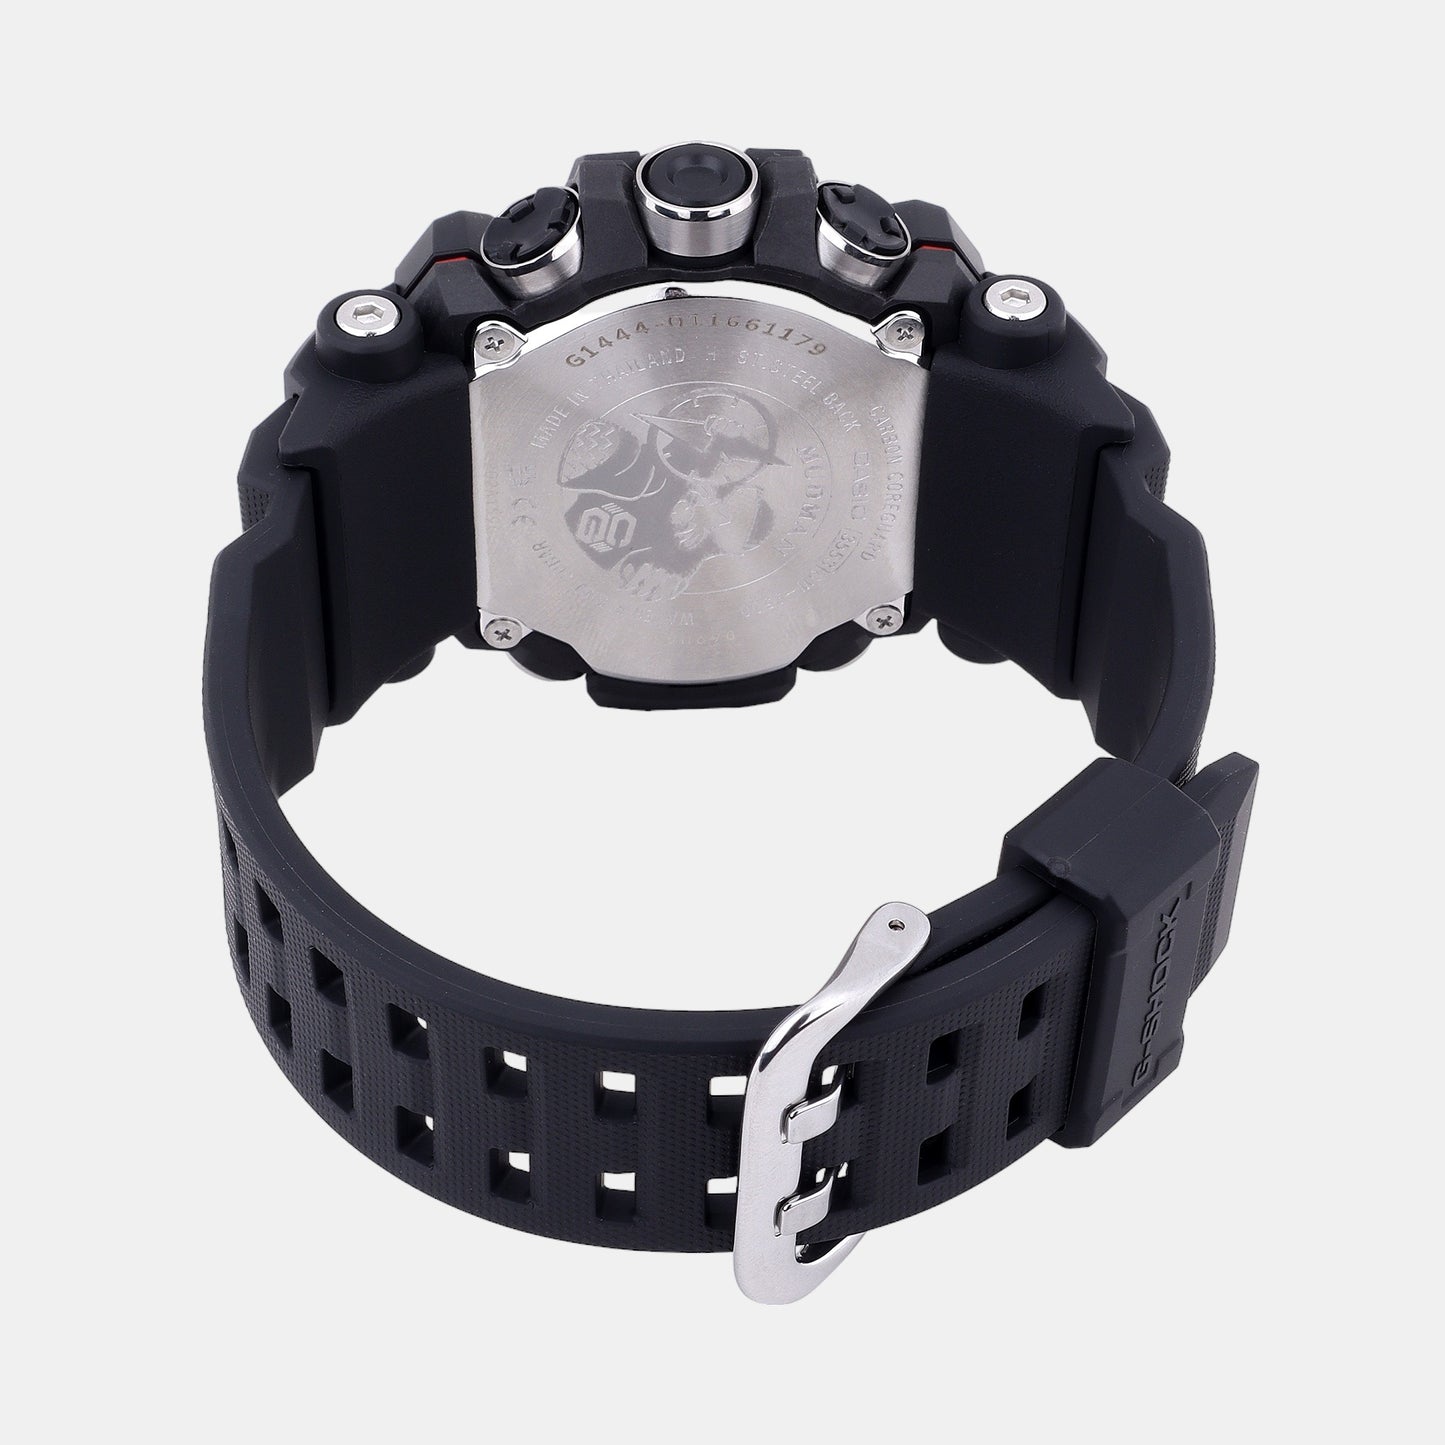 G-Shock Male Black Digital Resin Watch G1444